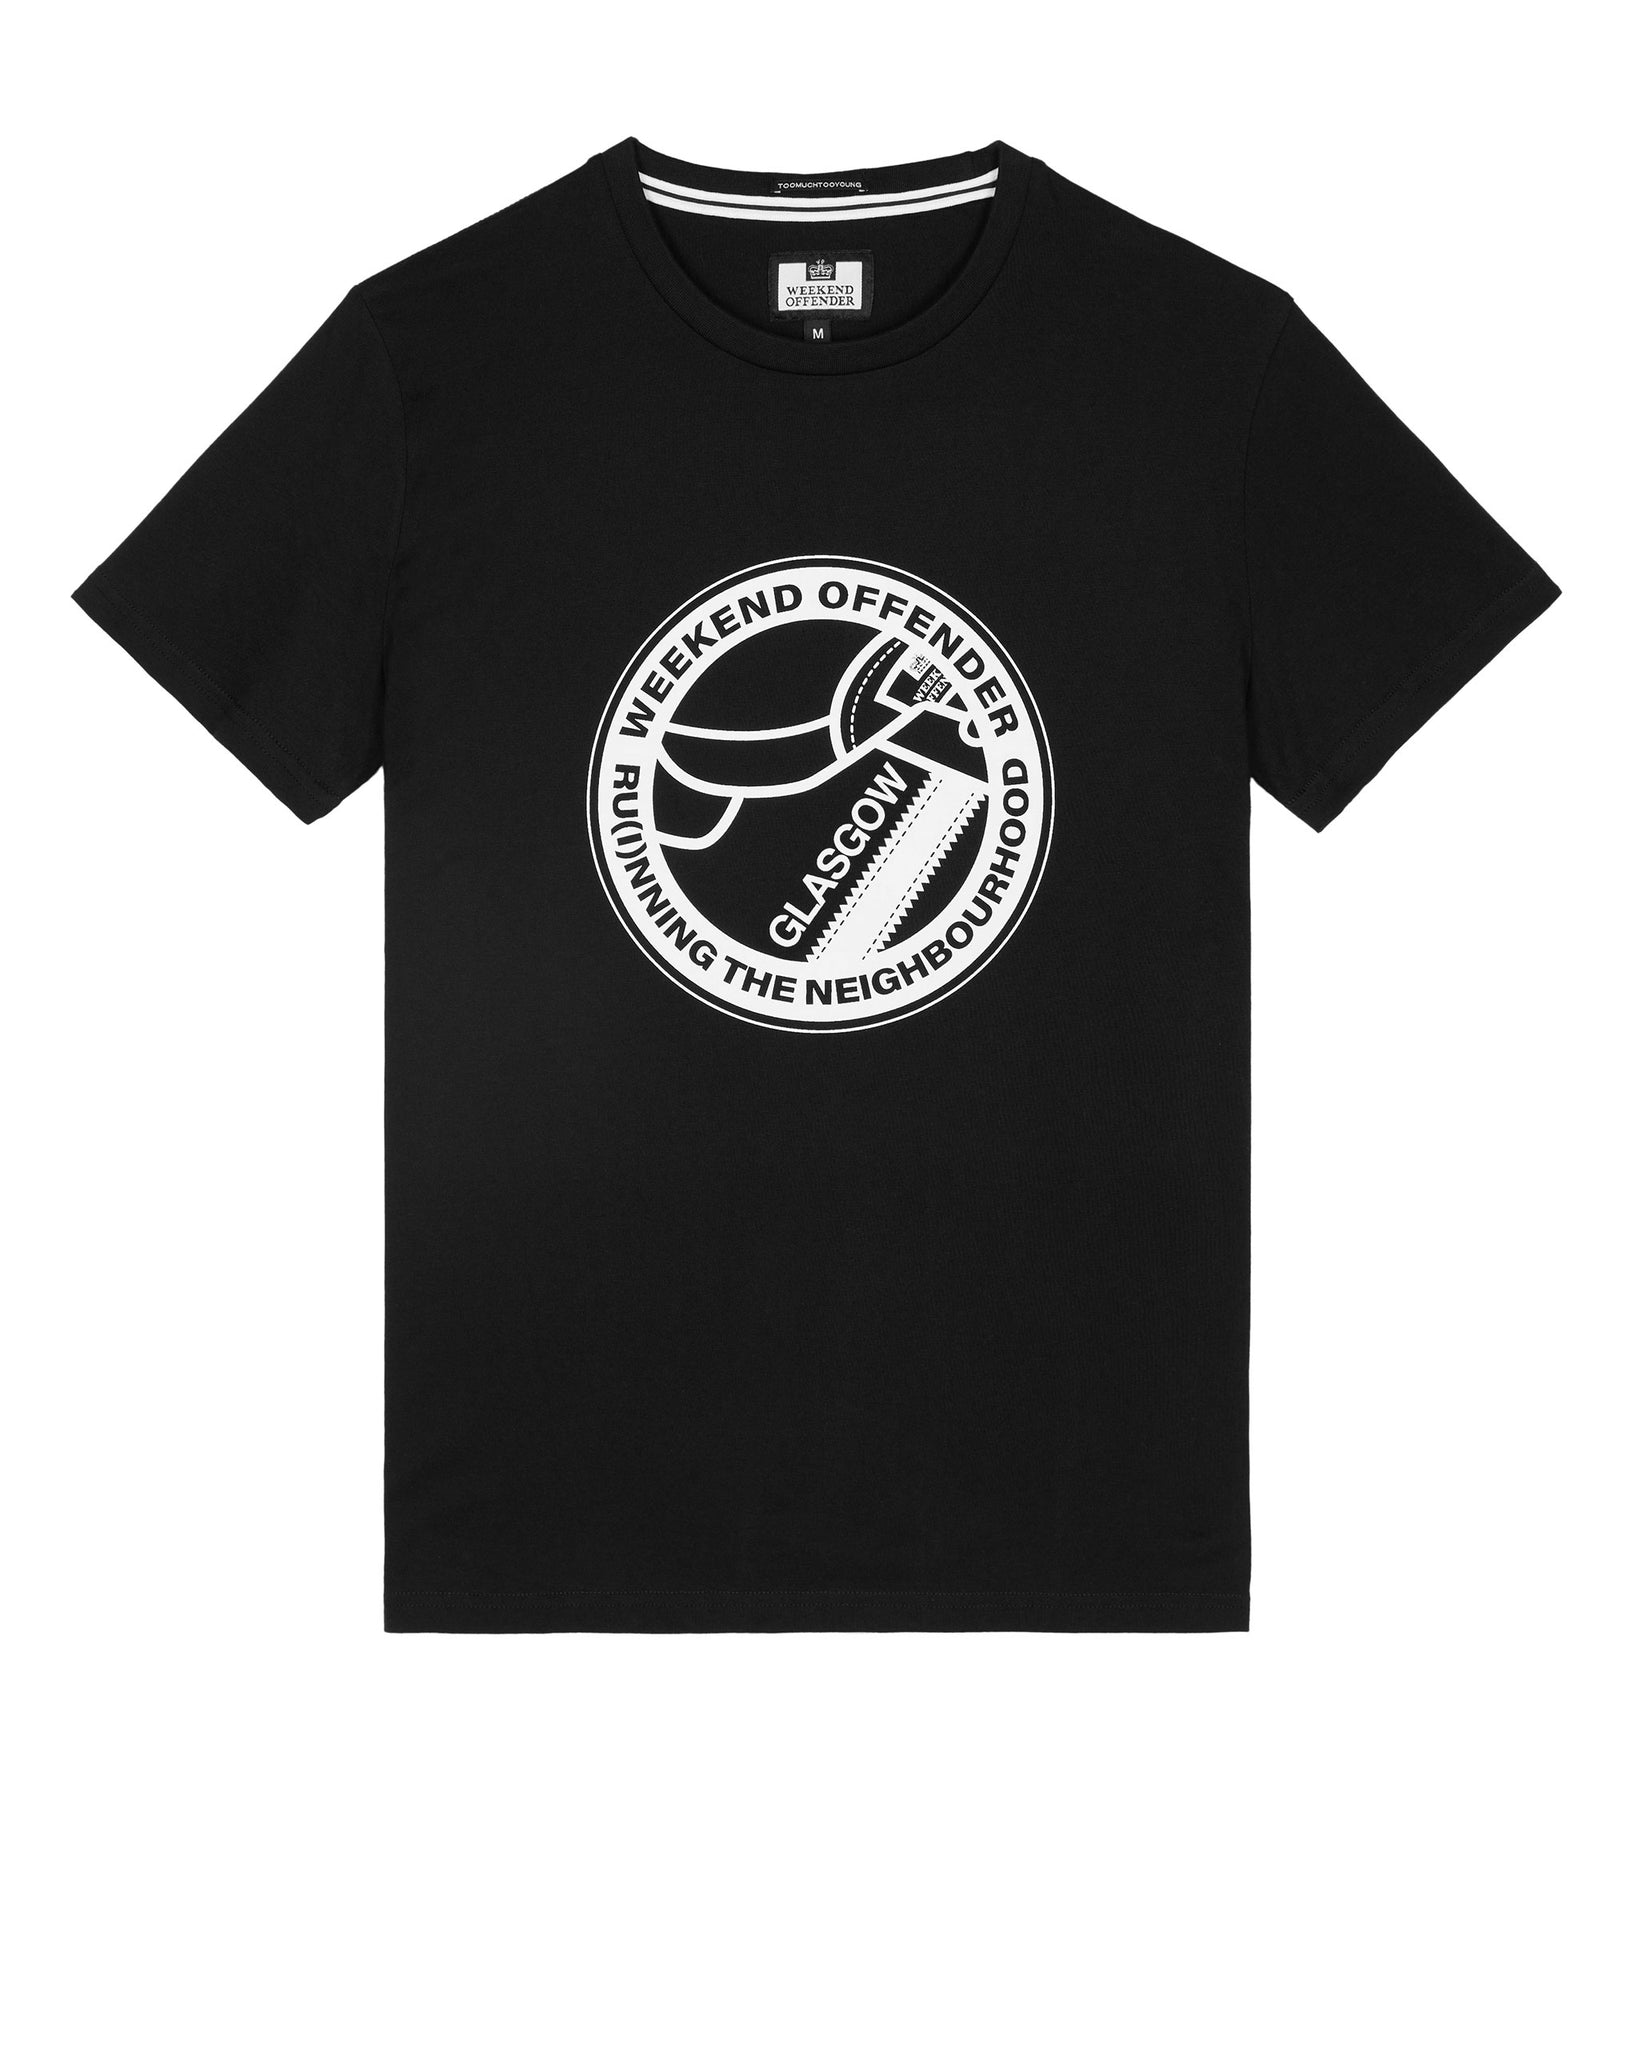 City Series 5 Glasgow T-Shirt Black